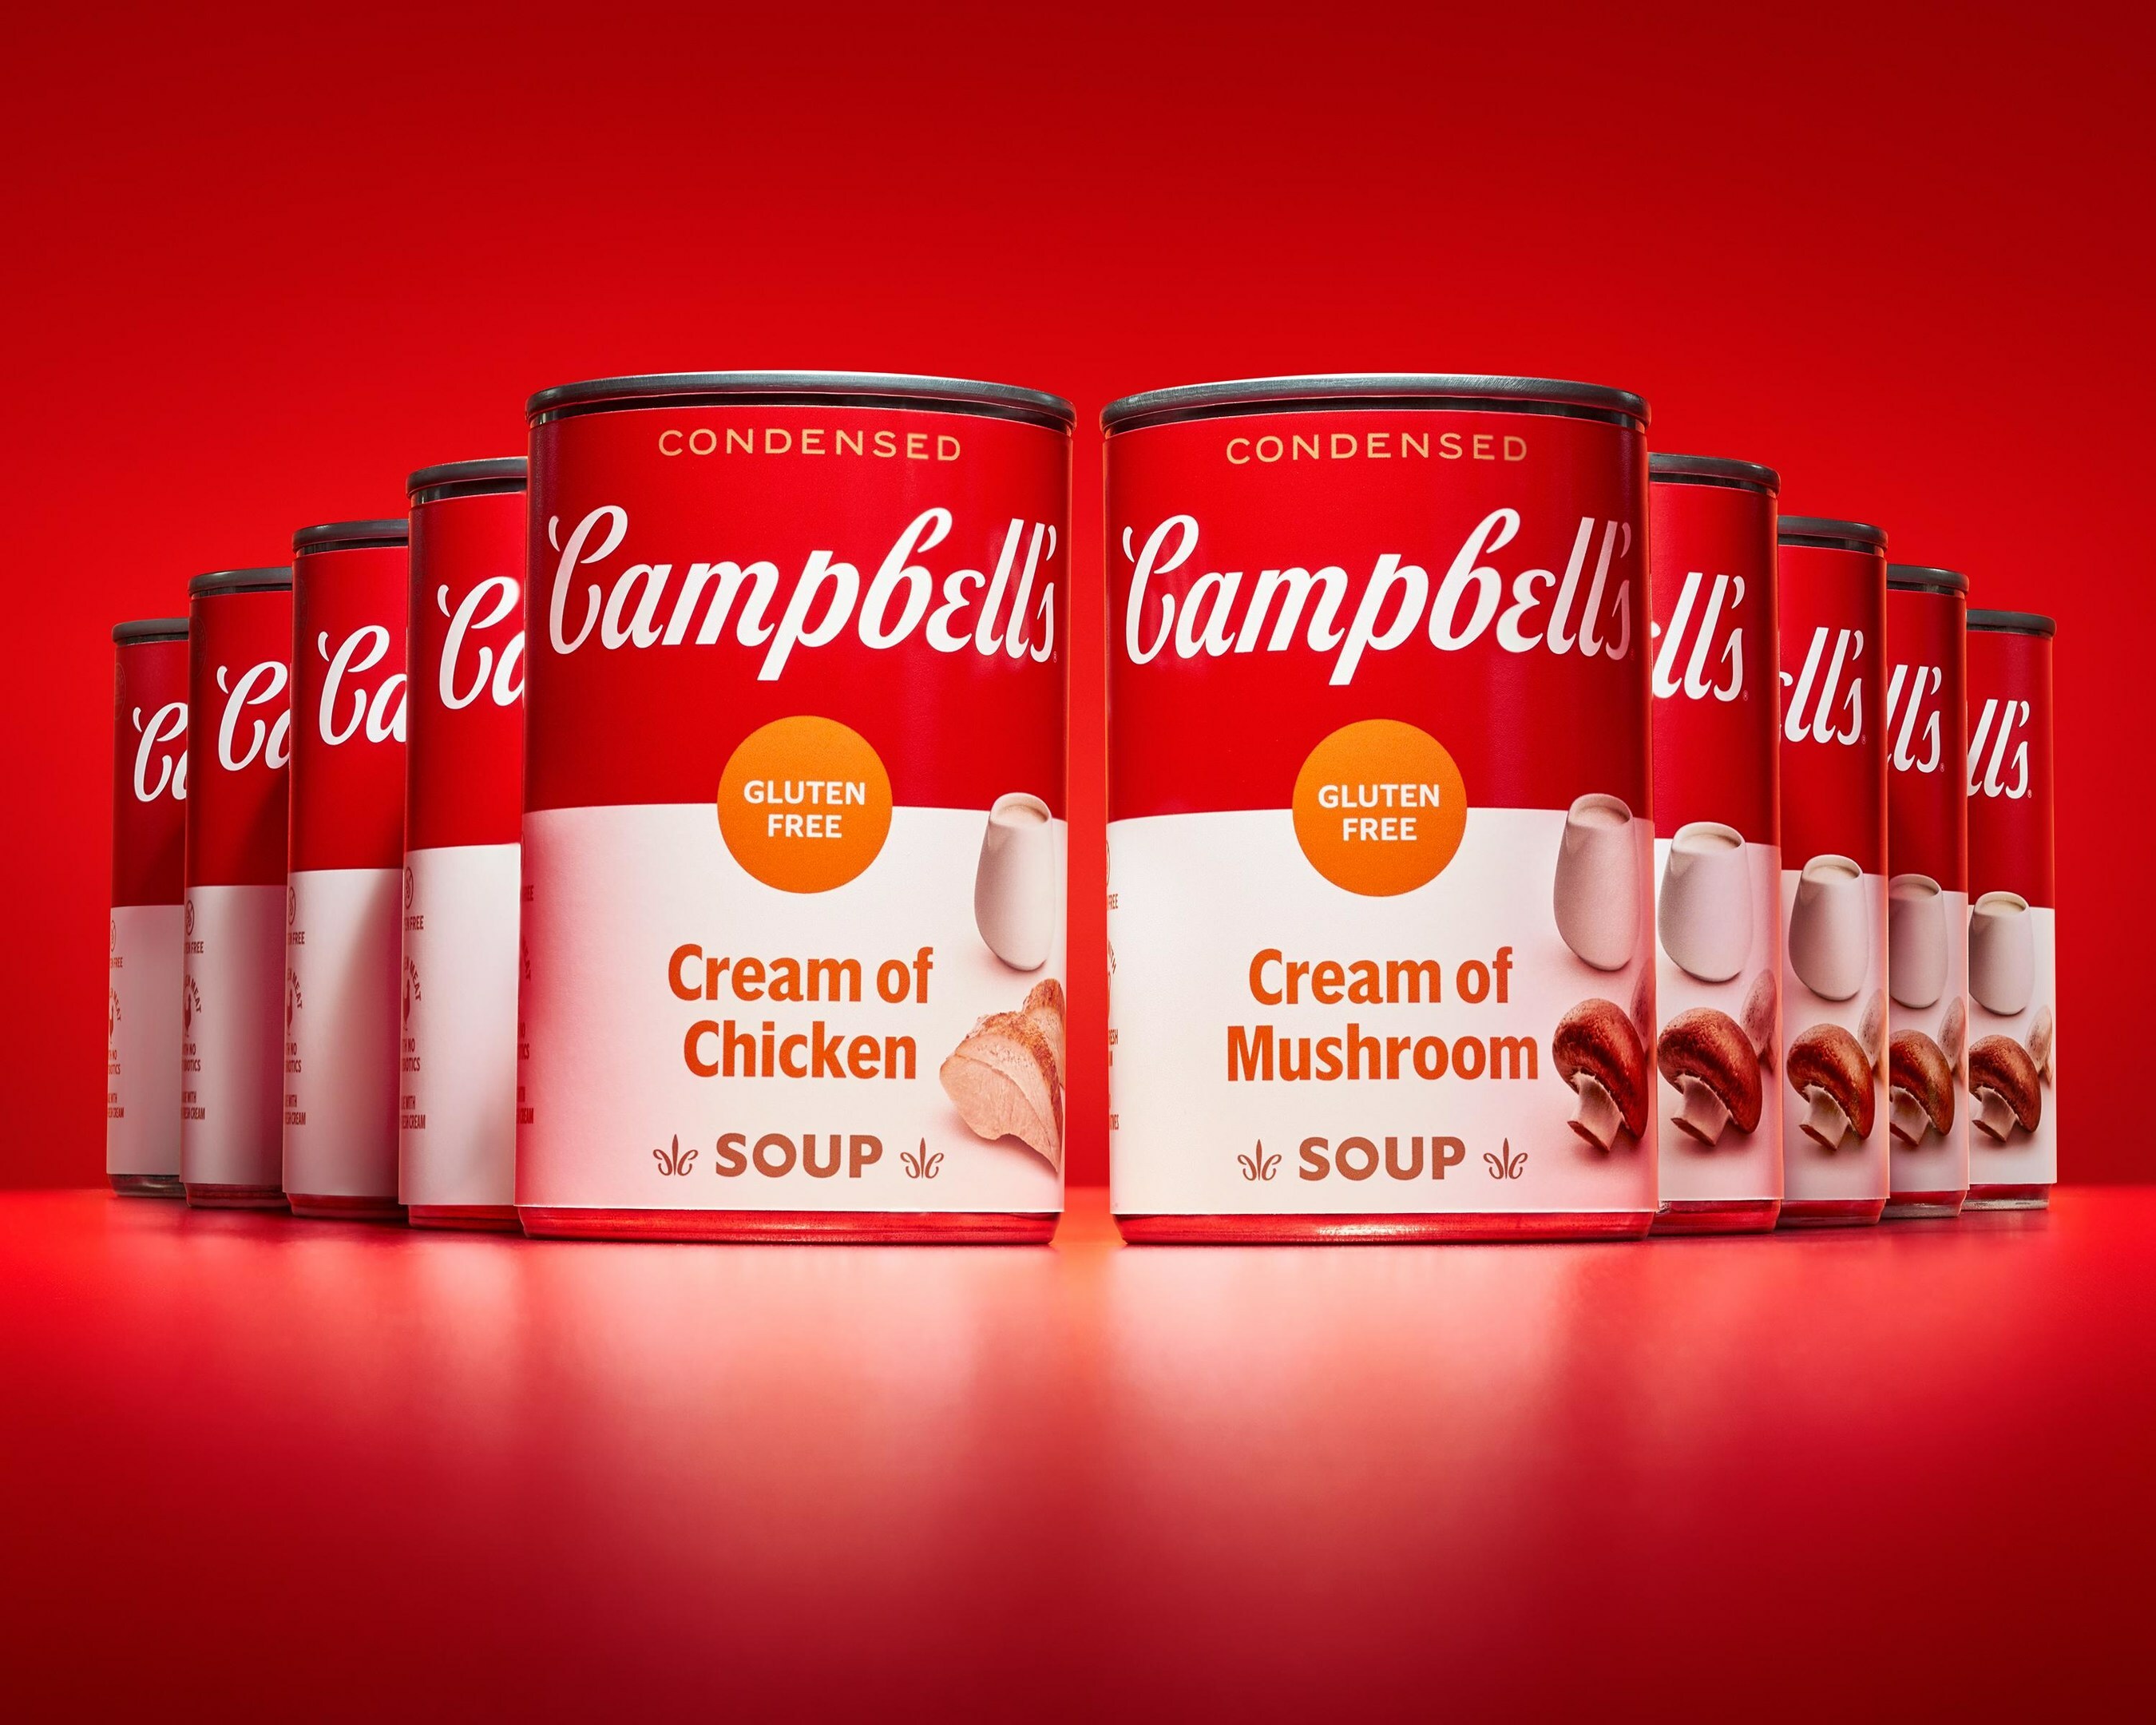 Campbell's new gluten-free Cream of Chicken and Gluten Free Cream of Mushroom soups